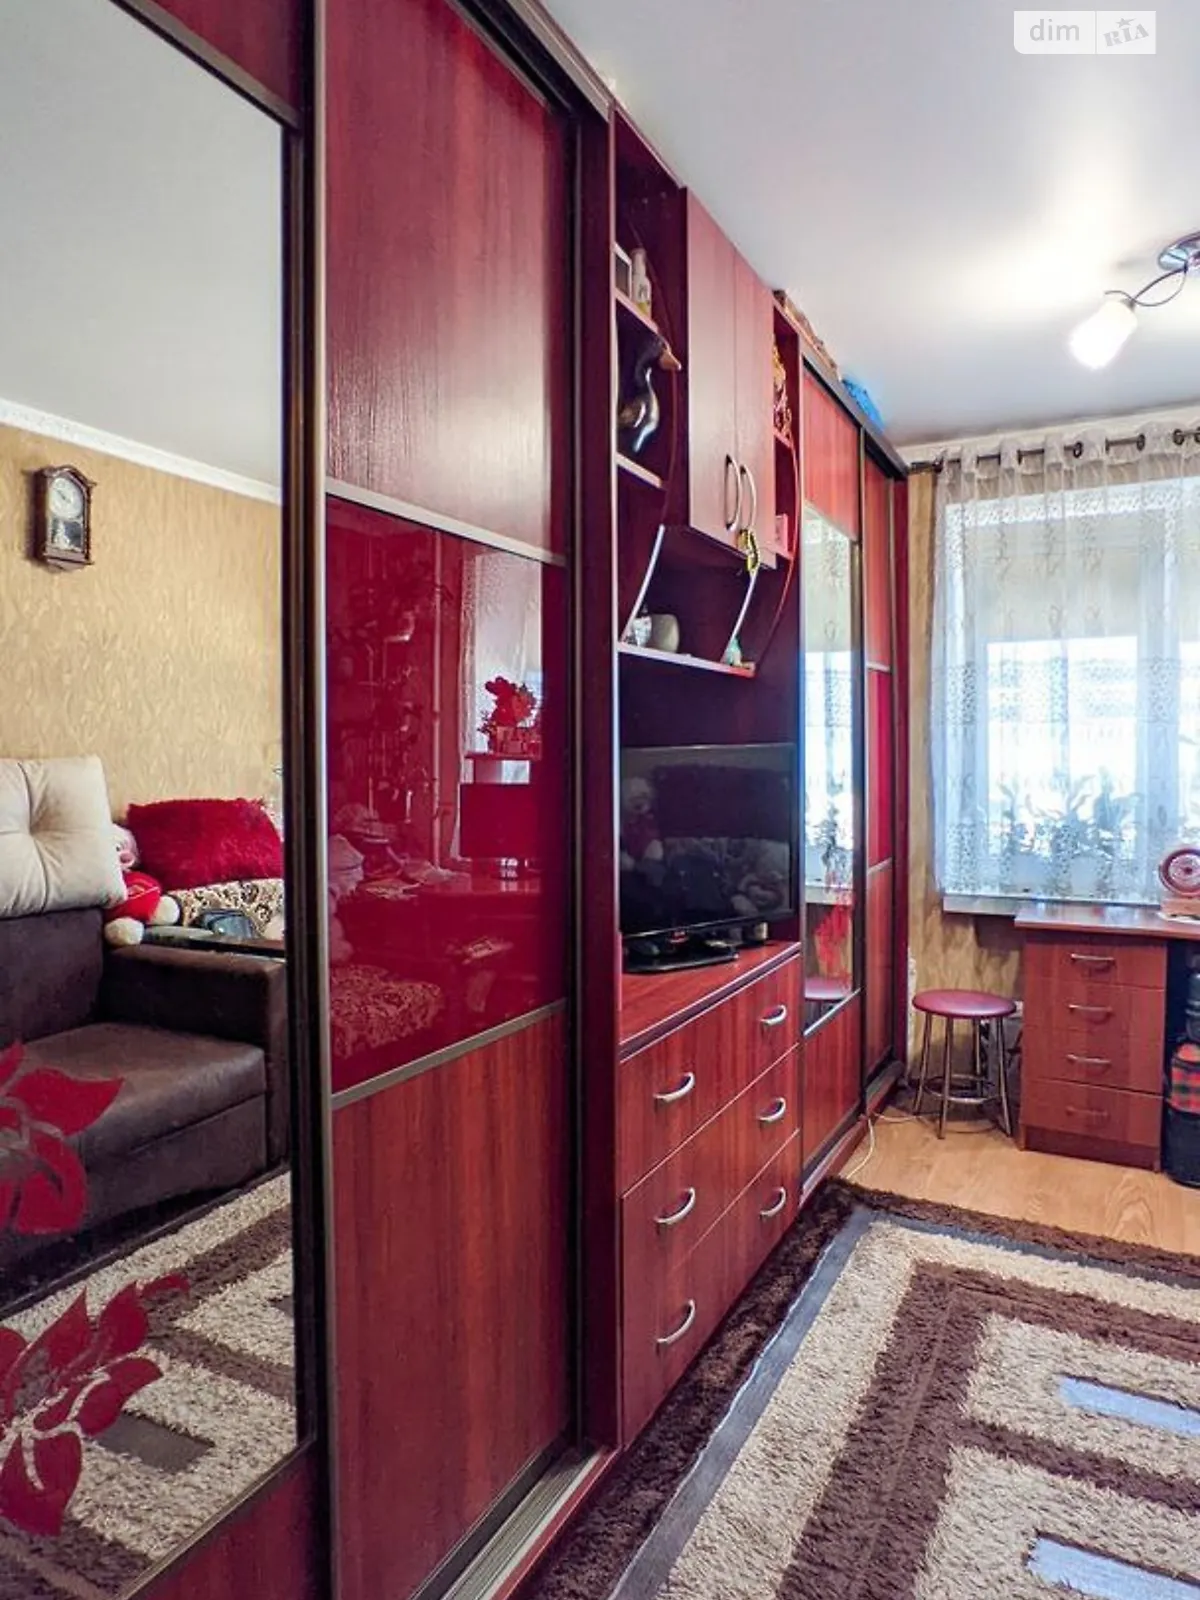 Продается комната 24 кв. м в Ровно, цена: 12500 $